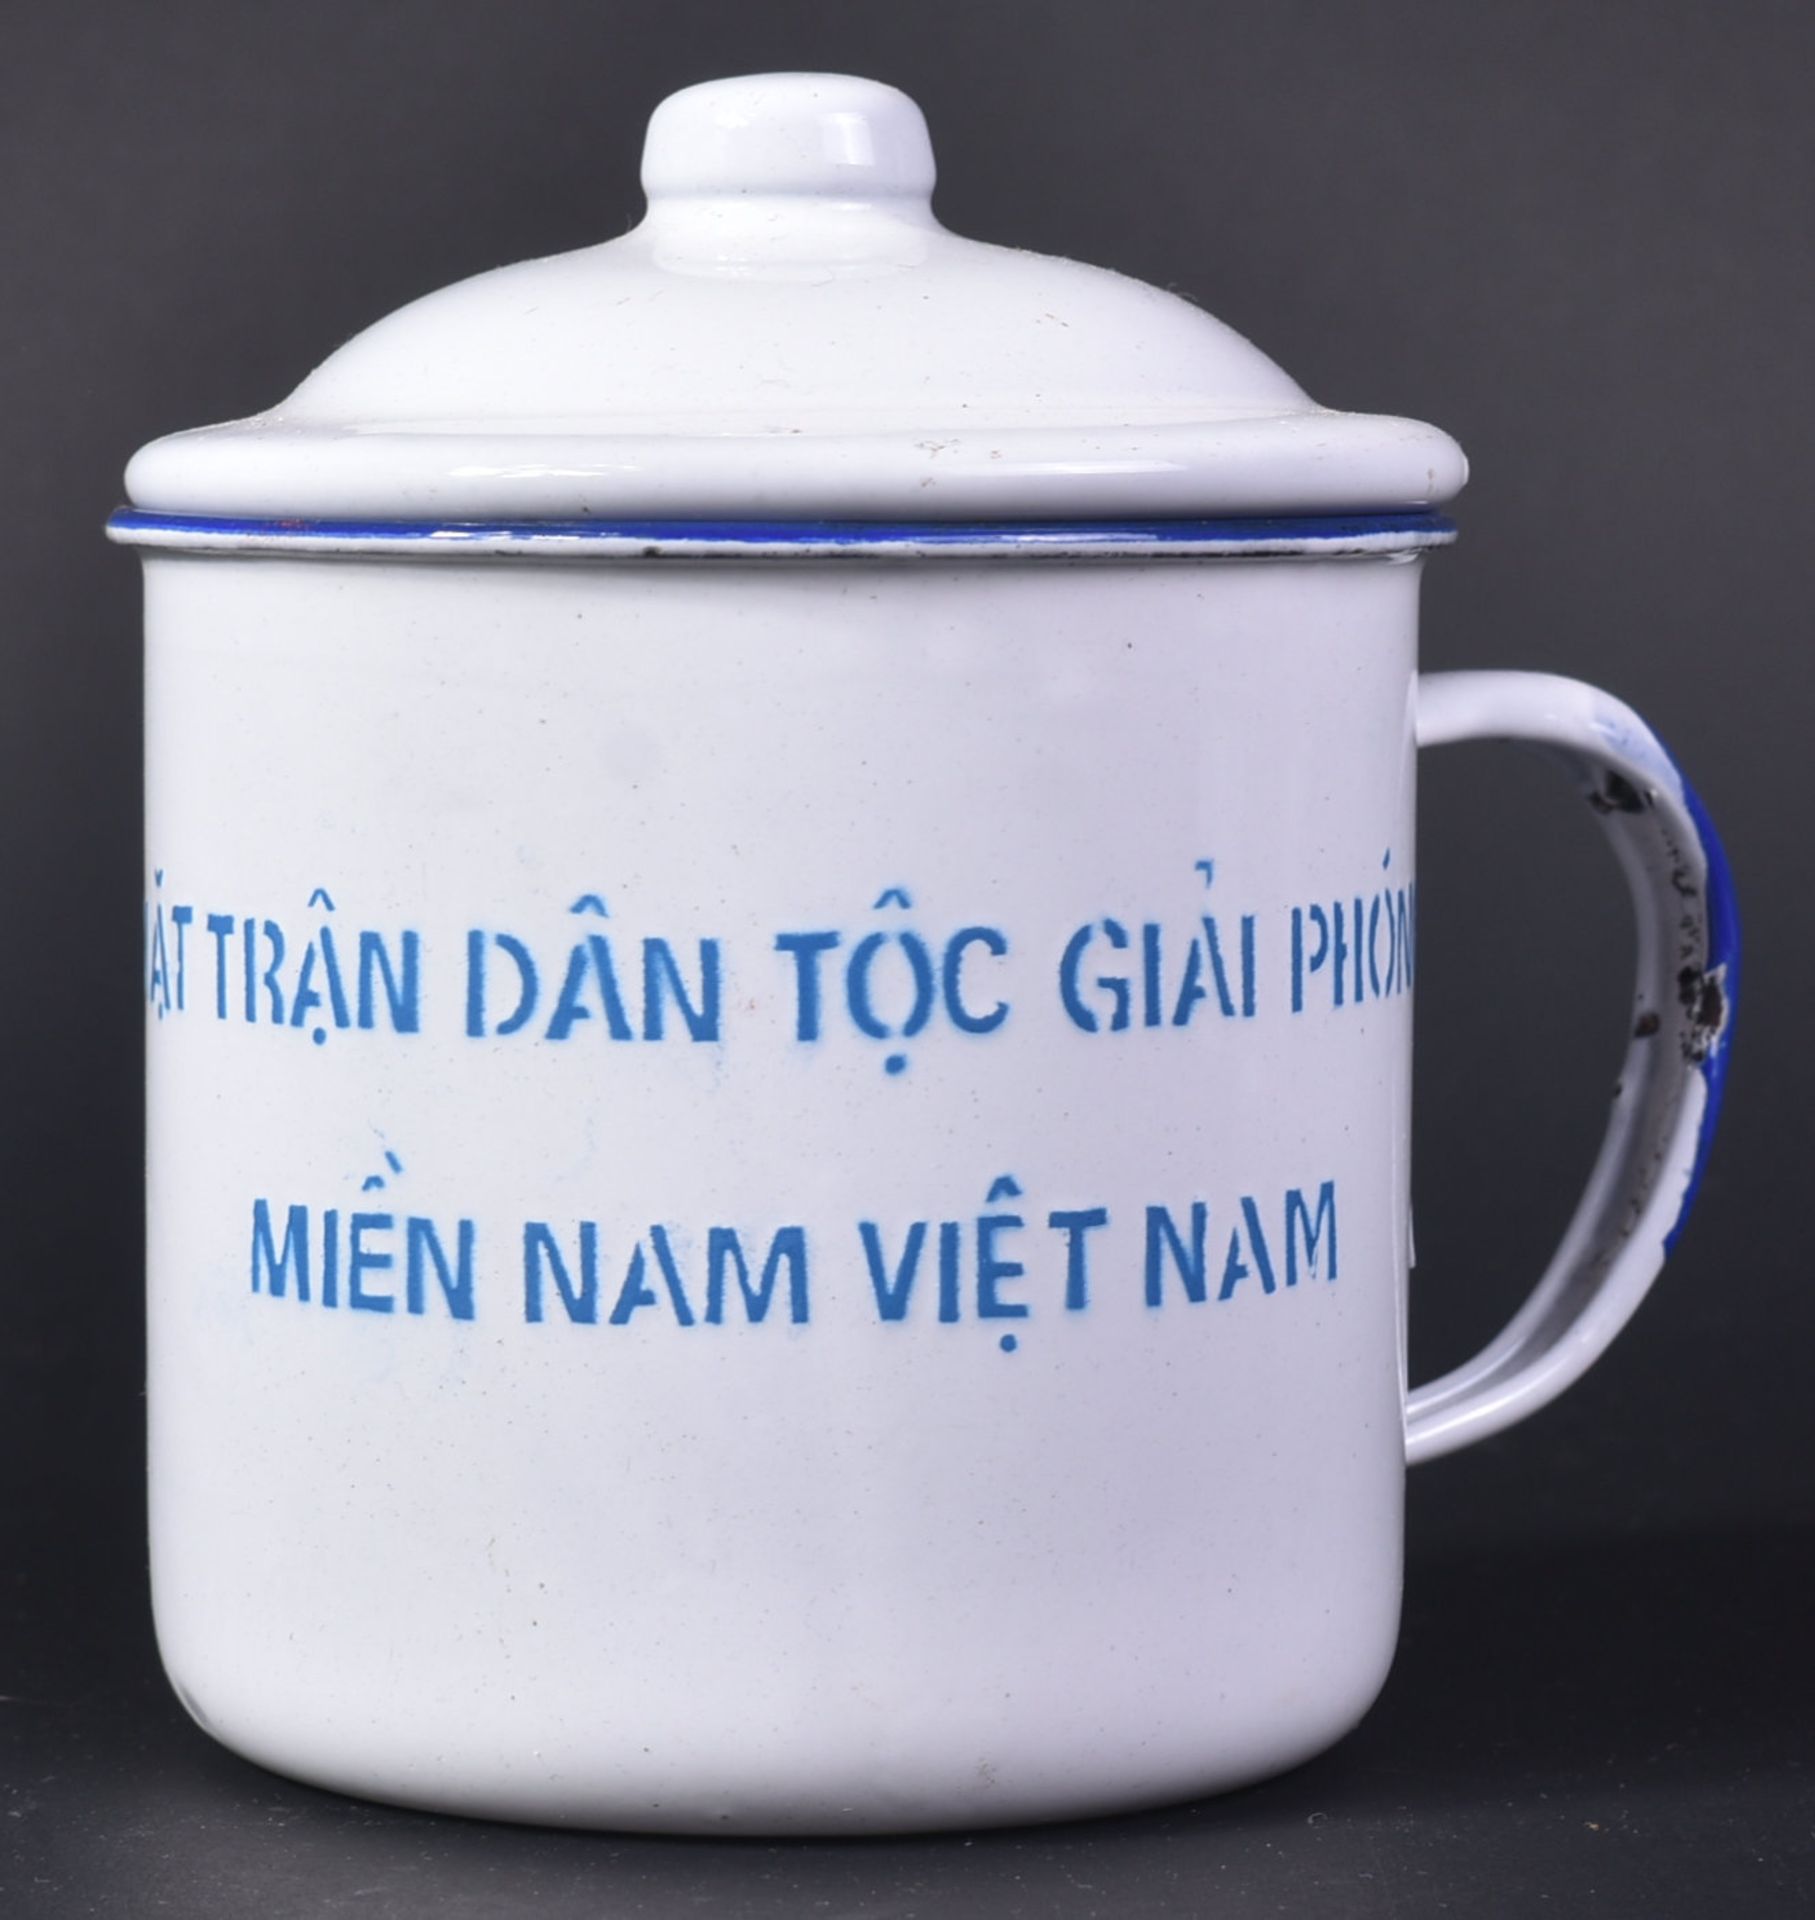 VIETNAM WAR ERA VIET CONG RICE CUP - Image 2 of 8